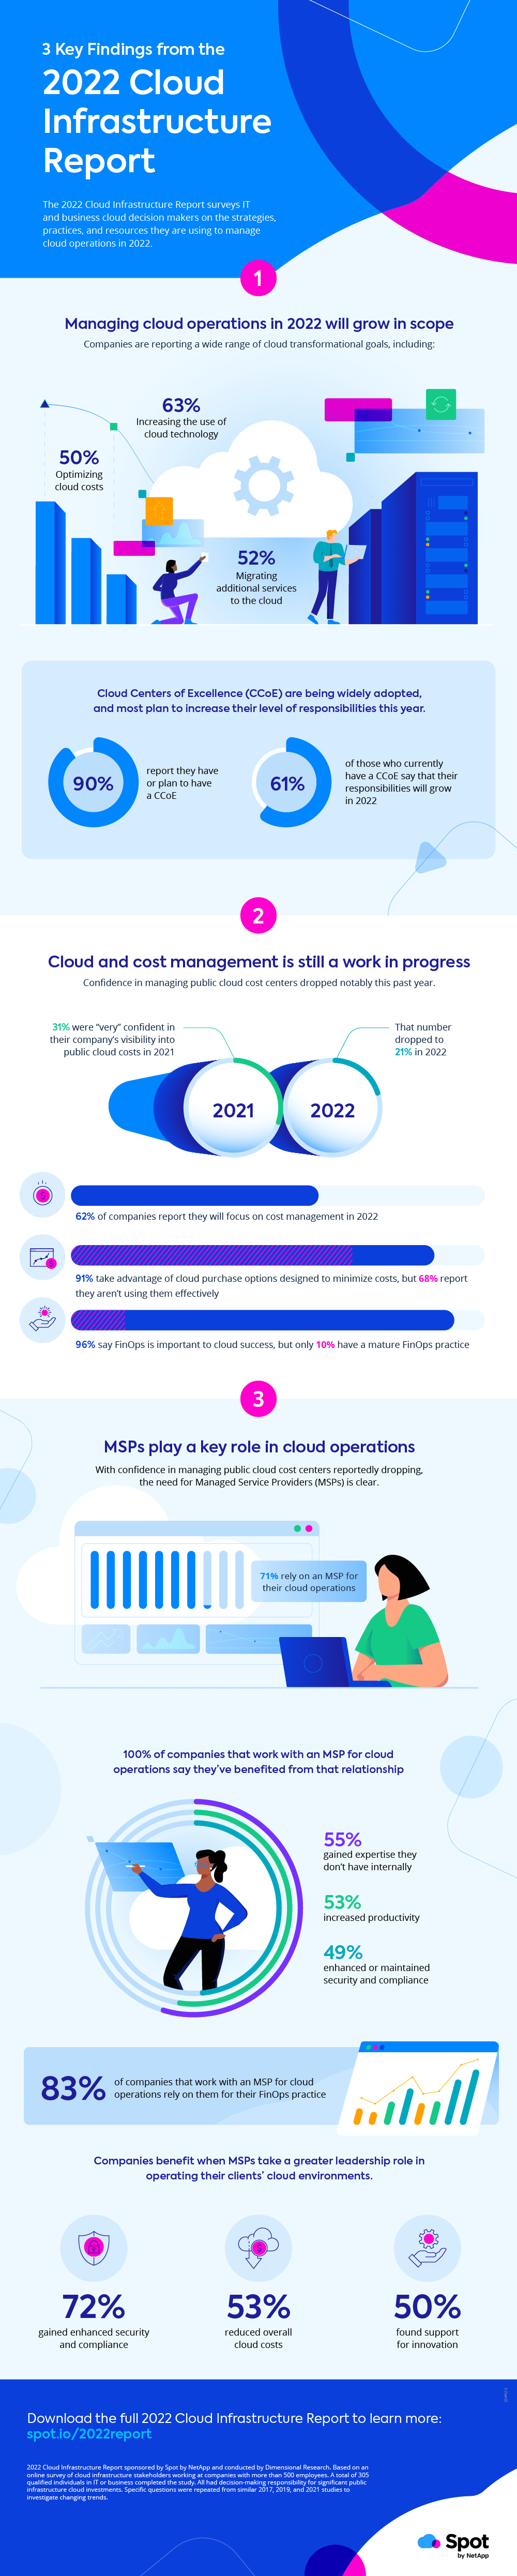 Infographic_Cloud_Infrastructure_Report